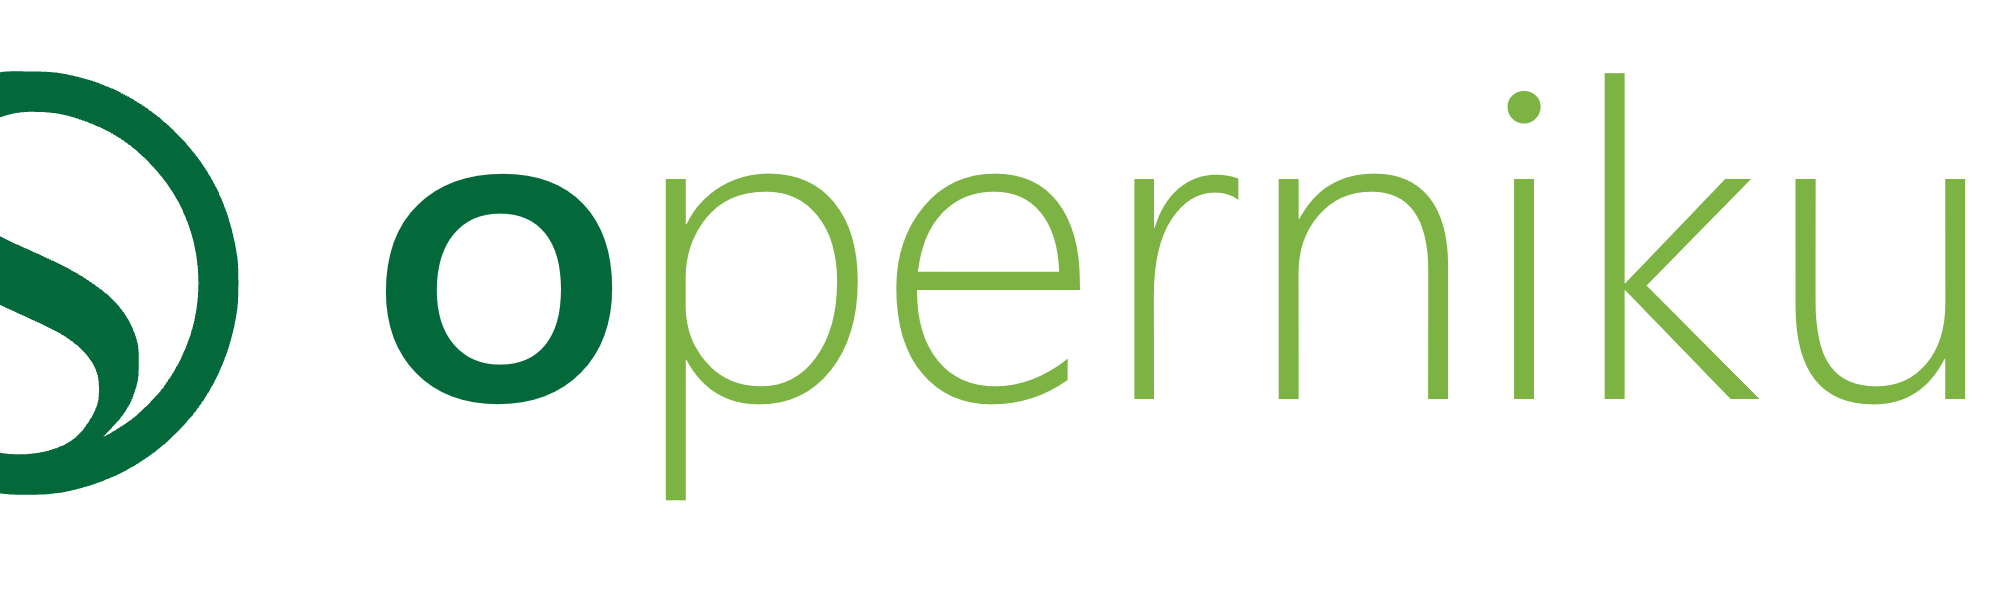 Logo opernikus